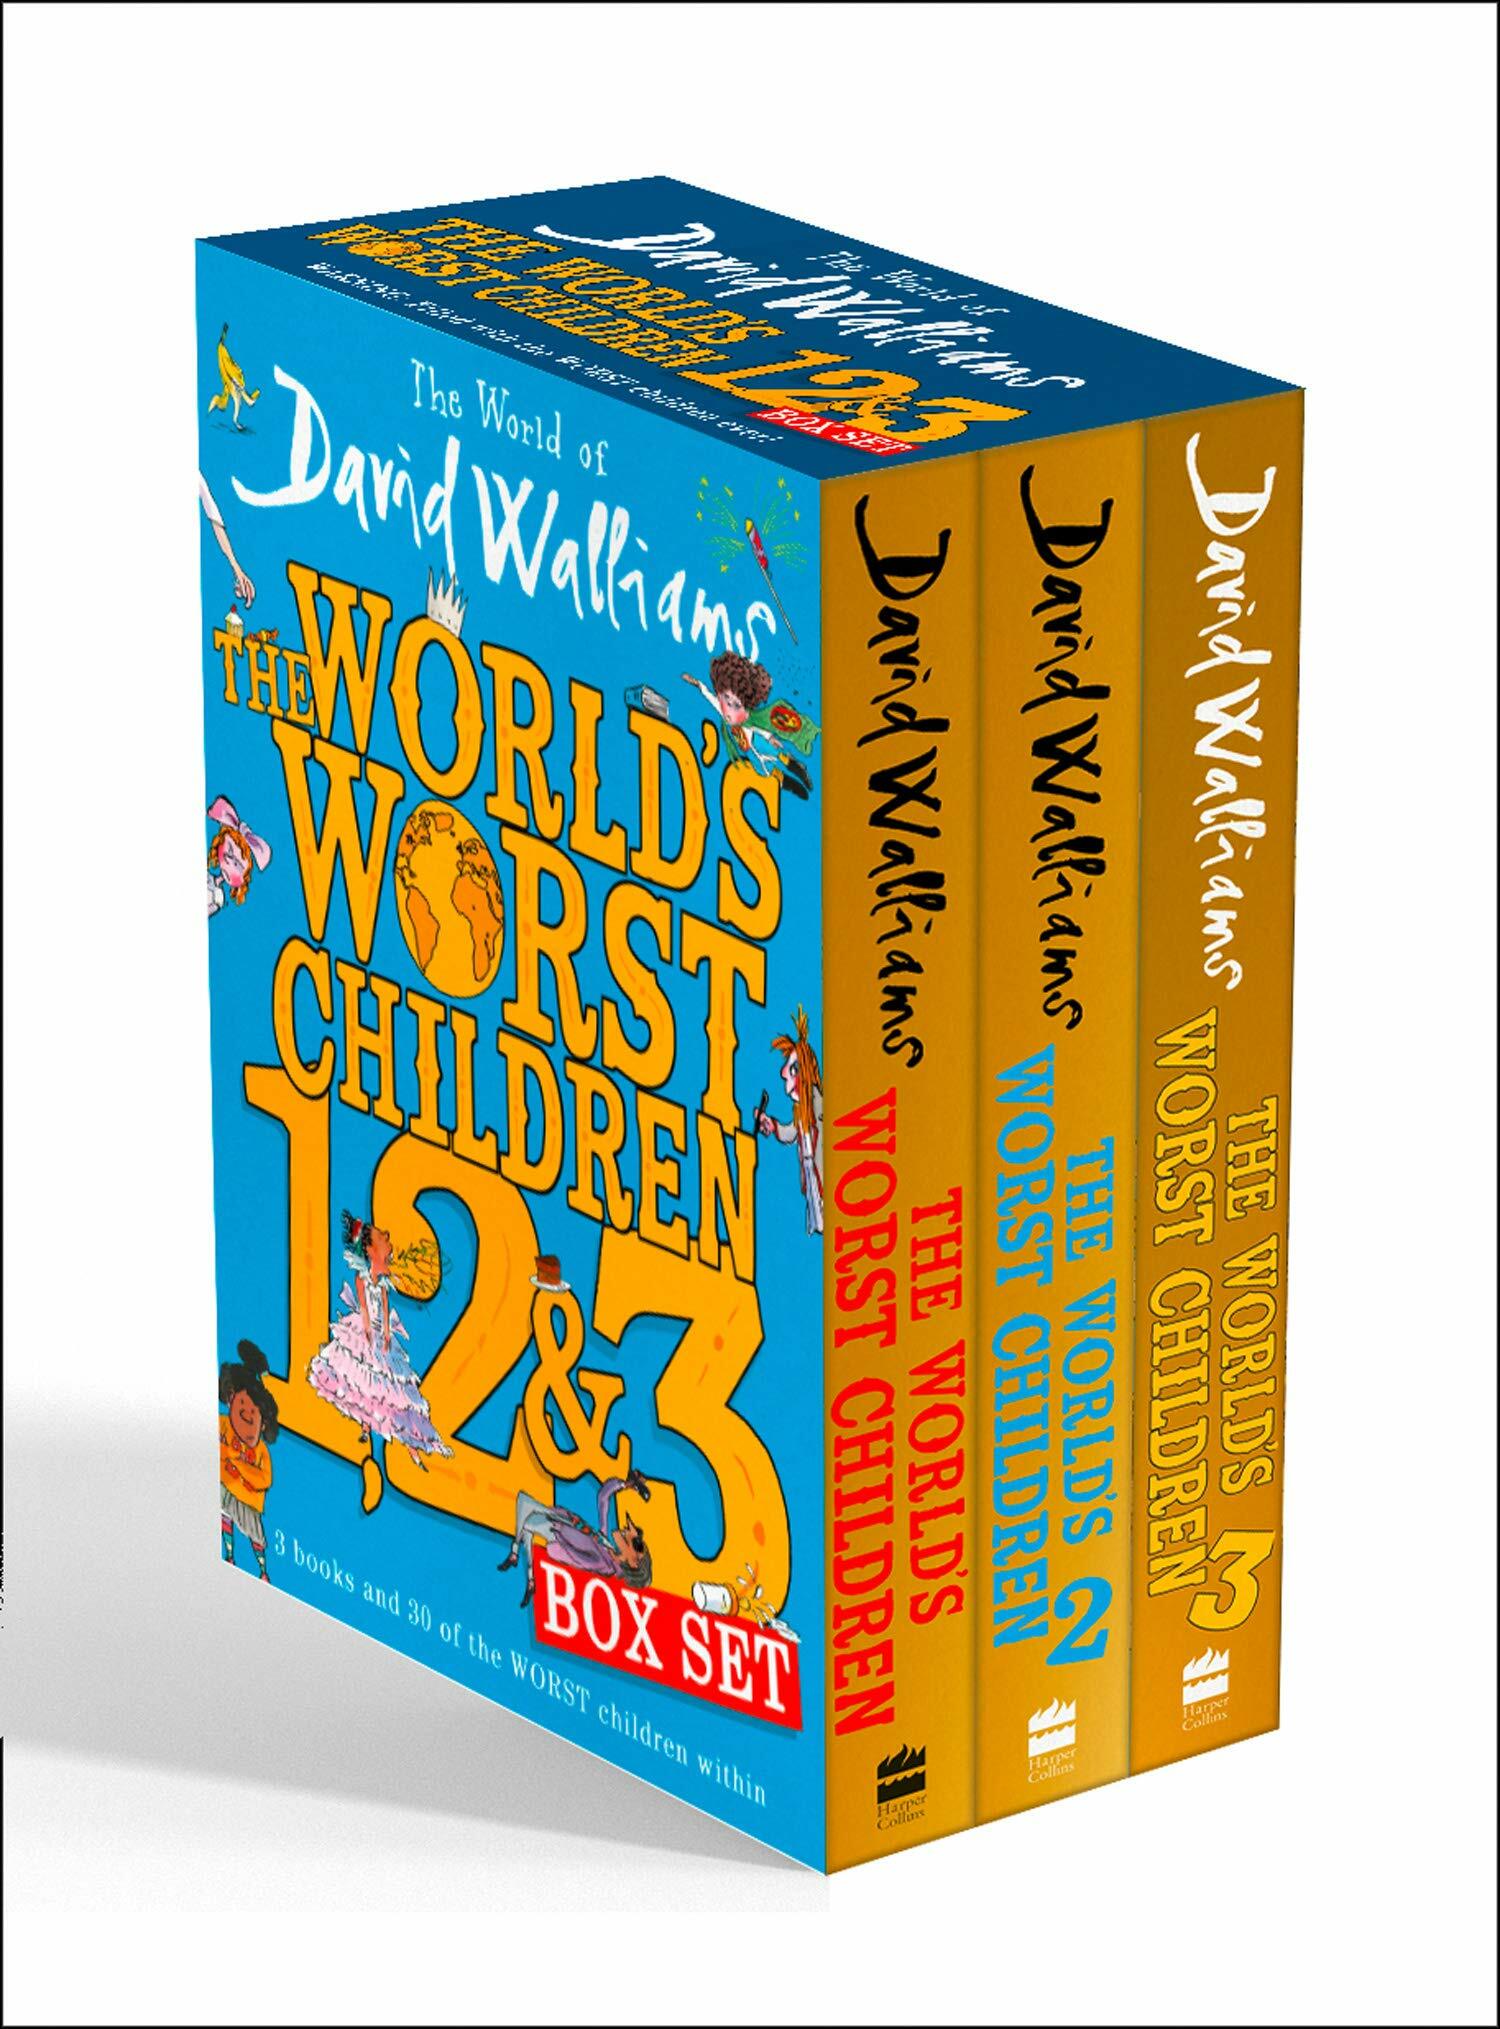 The World of David Walliams: The Worlds Worst Children 1, 2 & 3 Box Set (Paperback 3권)